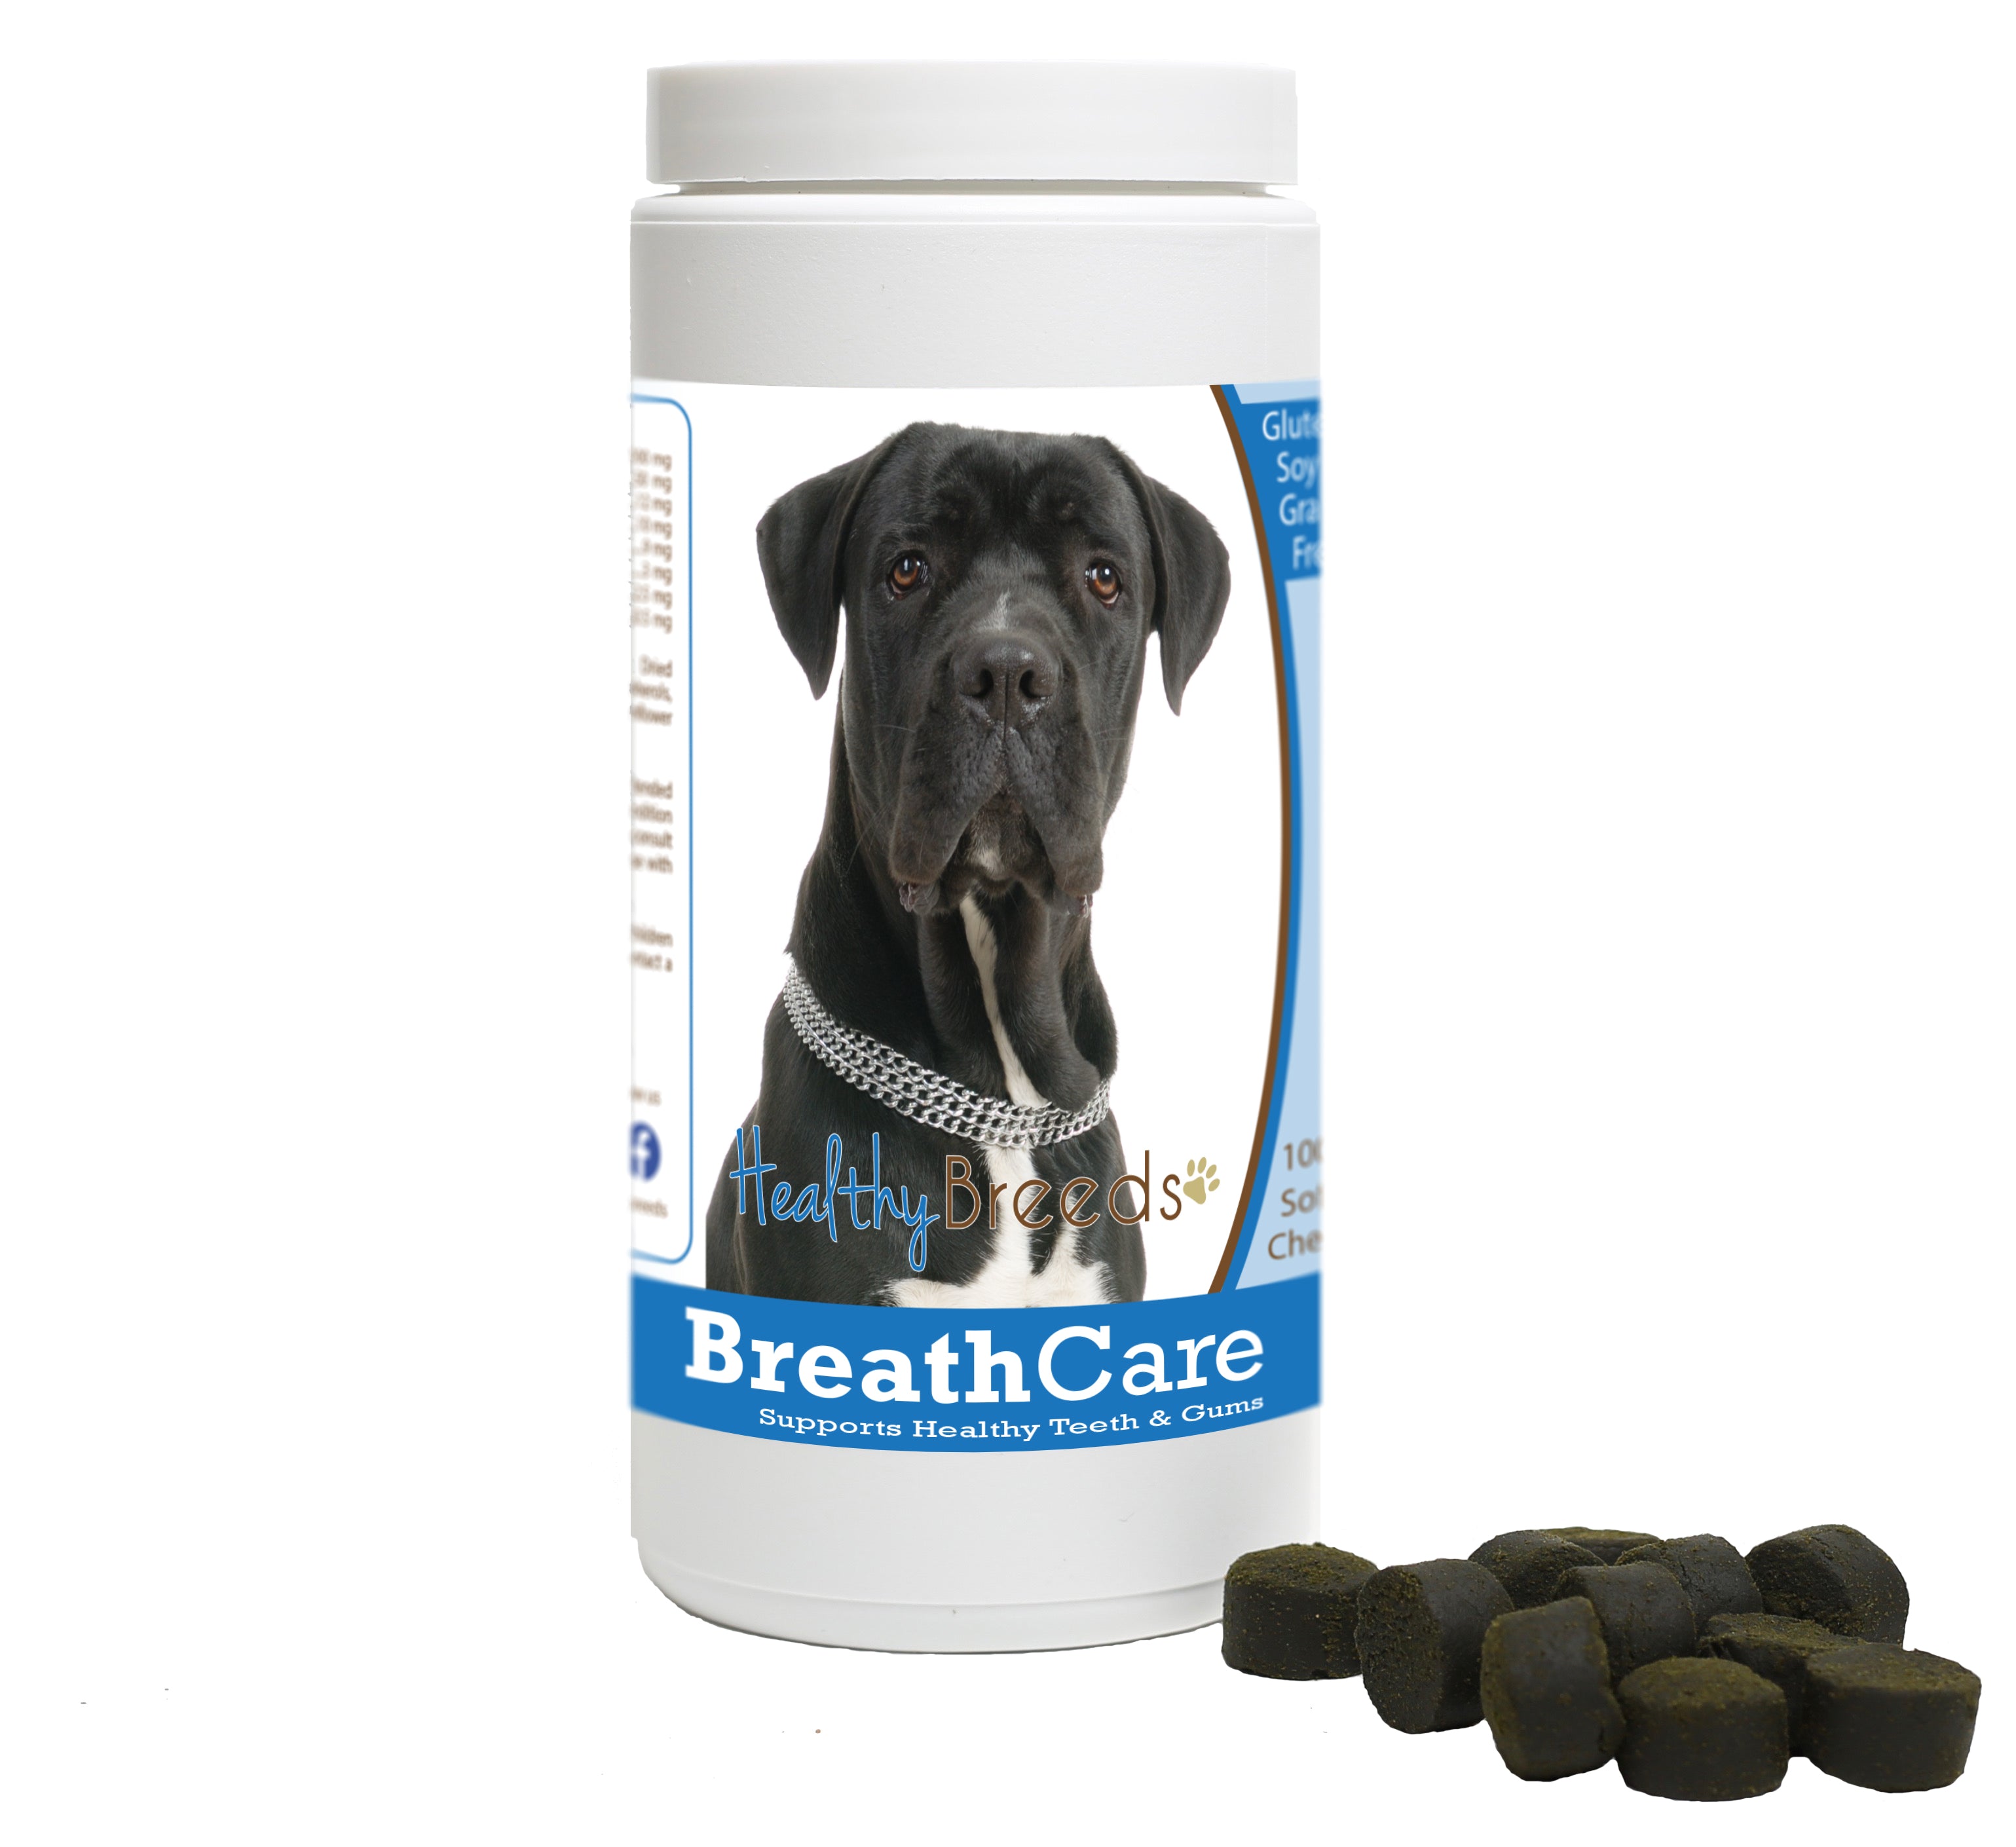 Cane Corso Breath Care Soft Chews for Dogs 60 Count